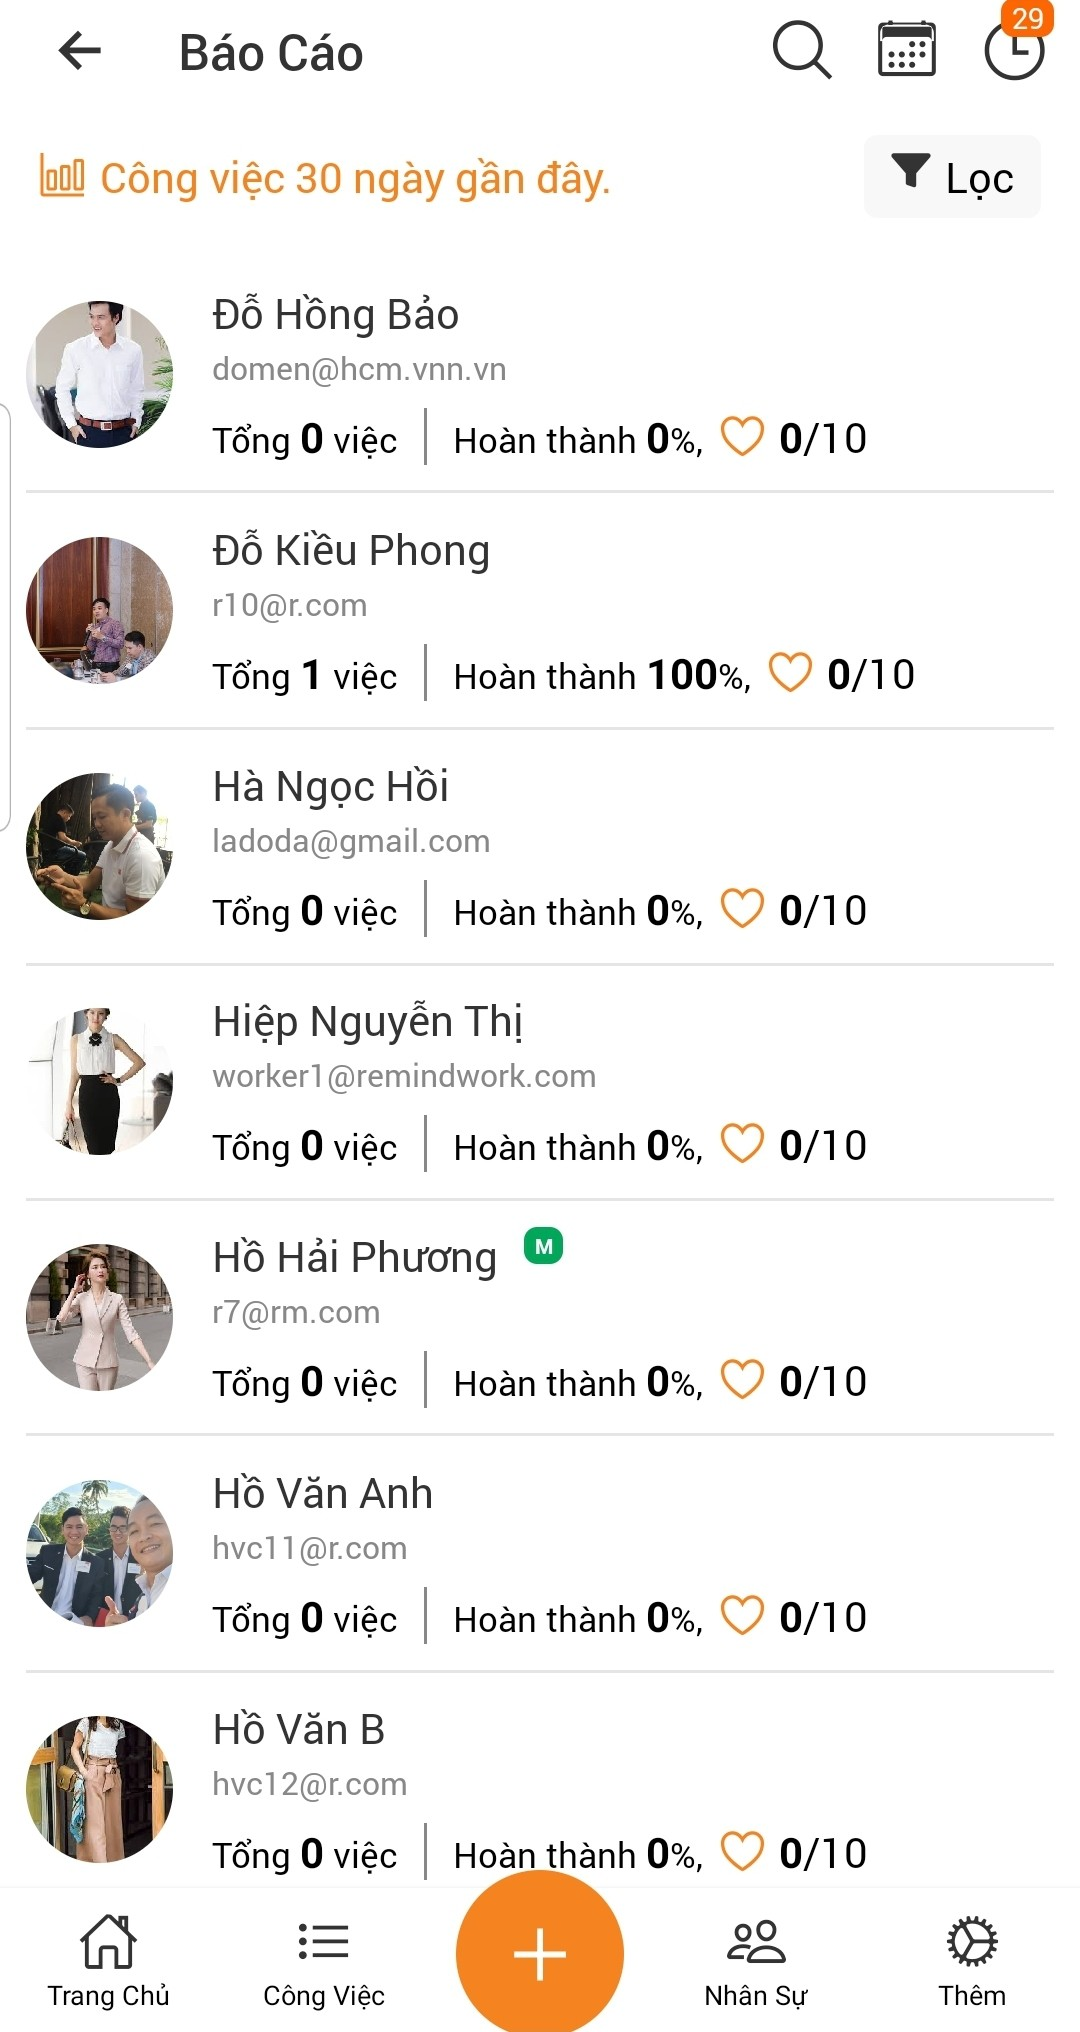 thong ke chat luong hoan thanh cong viec tren mobile app